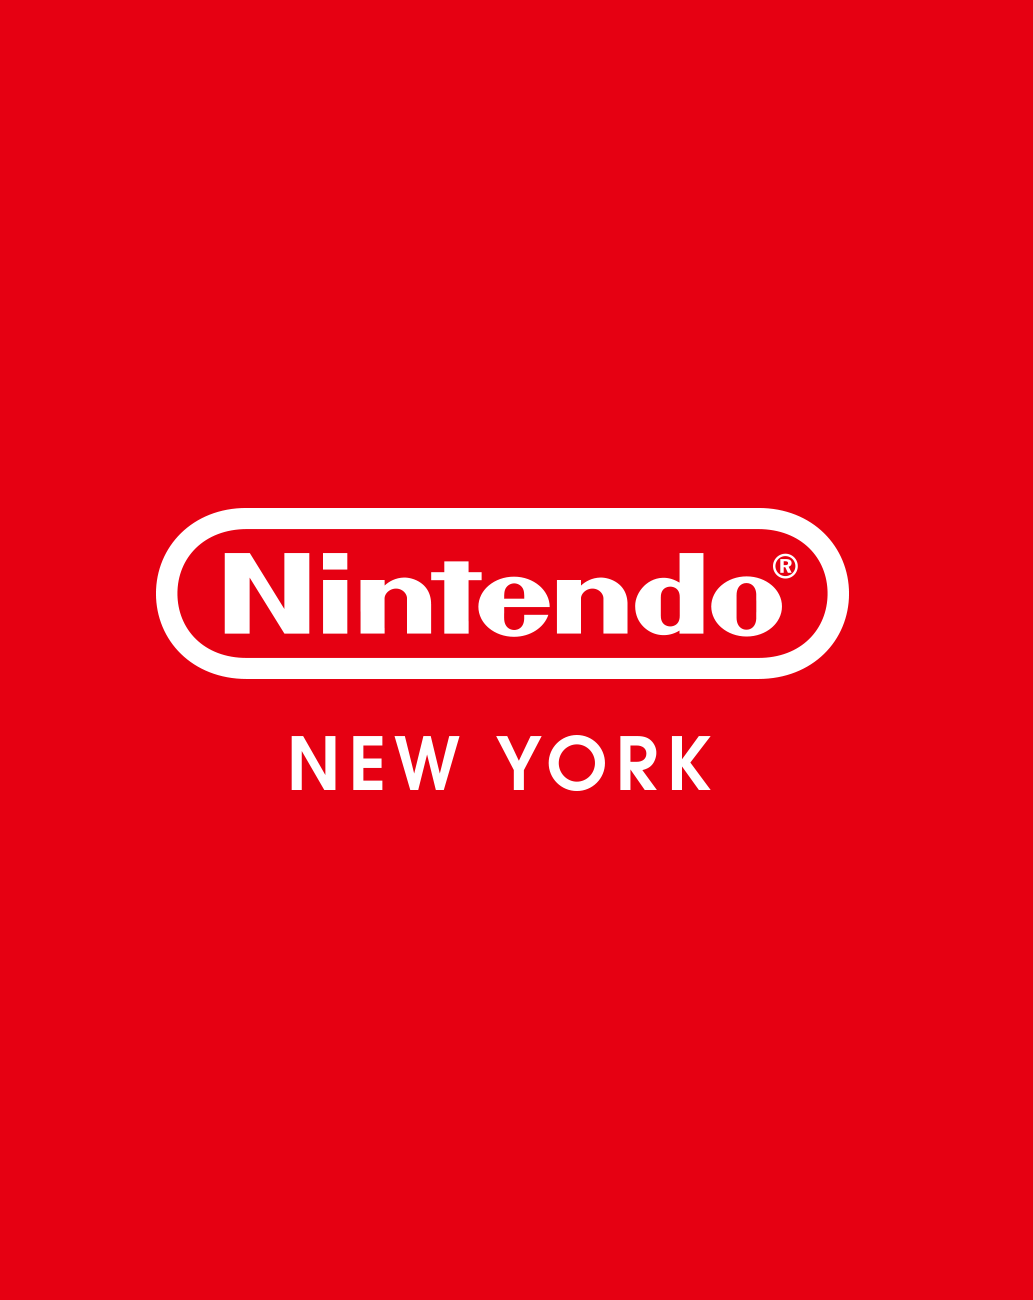 ULTIMATE Nintendo NY Store Tour 